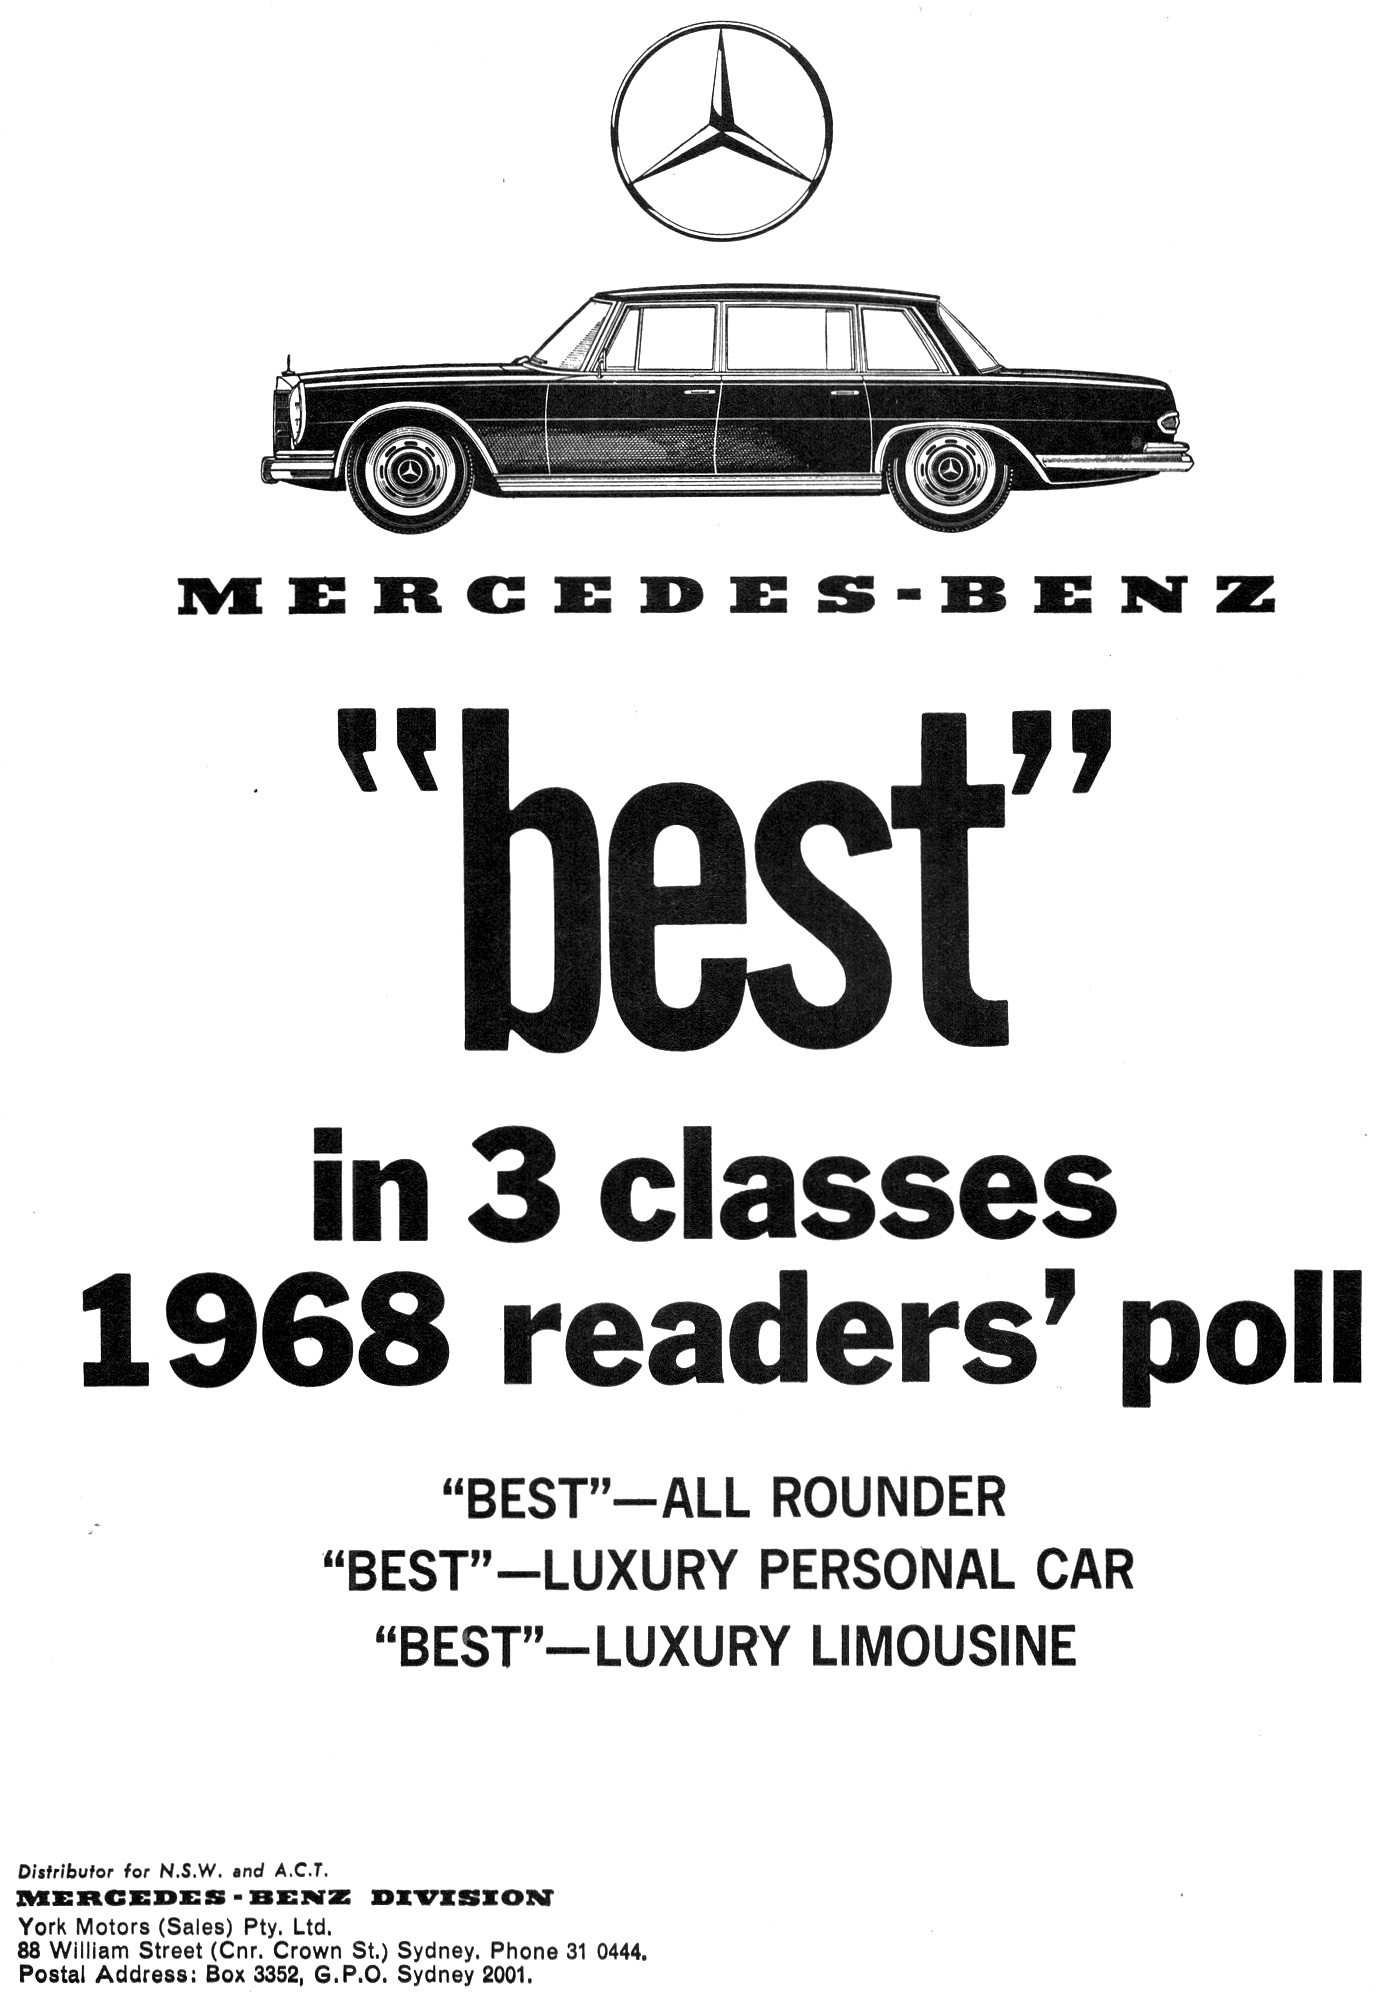 1968 Mercedes-Benz 600 W100 Best In 3 Classes